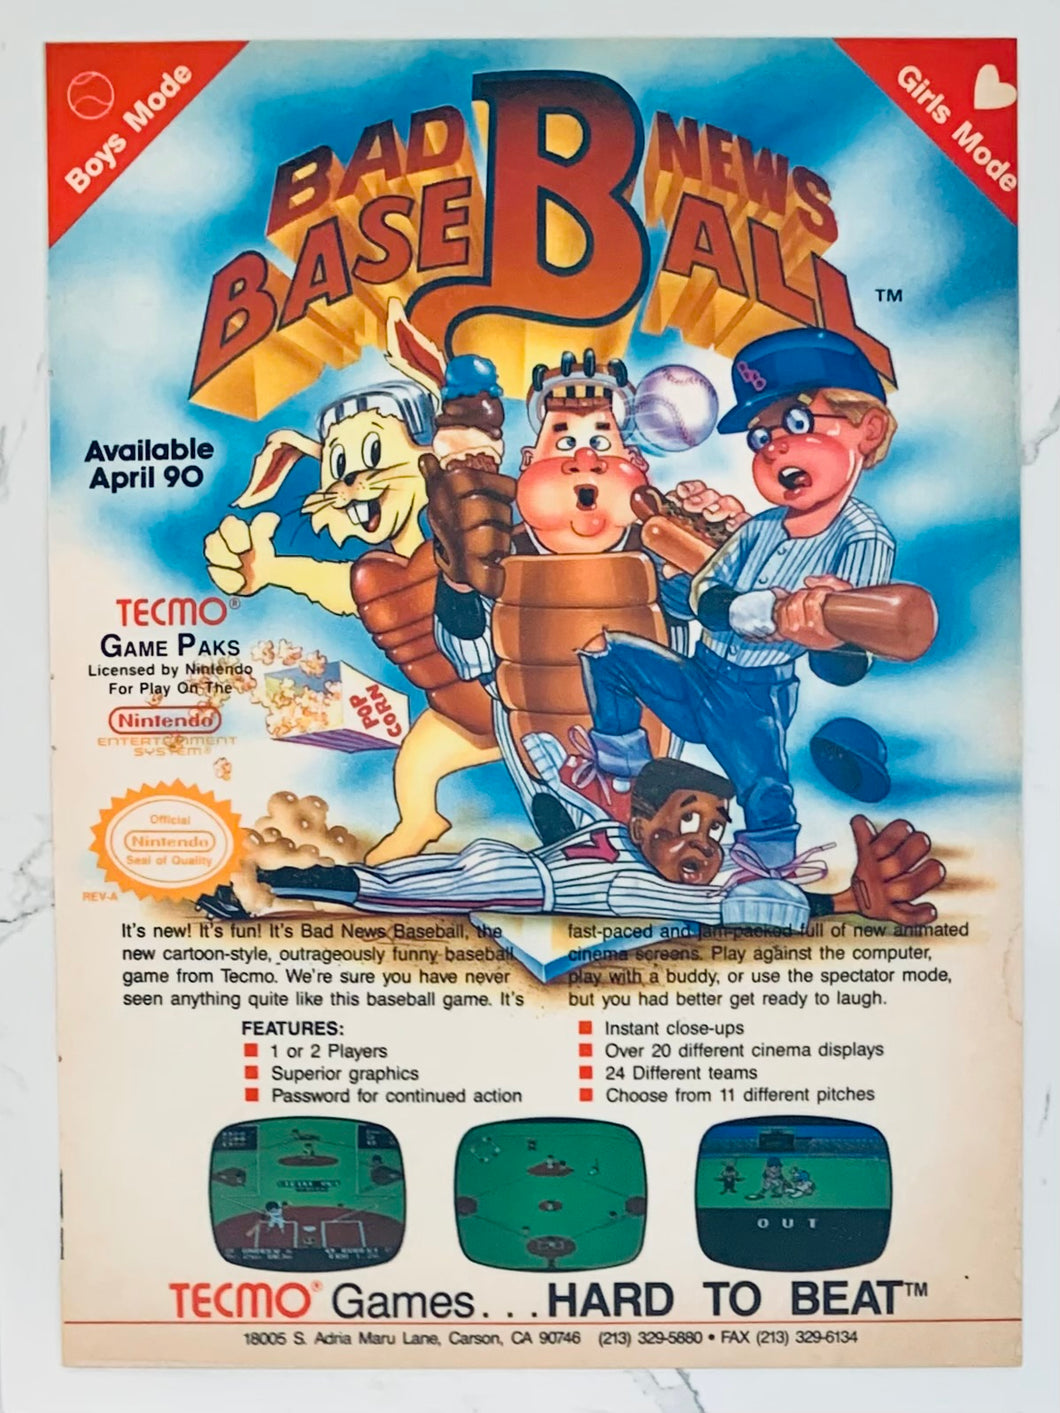 Bad News Baseball - NES - Original Vintage Advertisement - Print Ads - Laminated A4 Poster